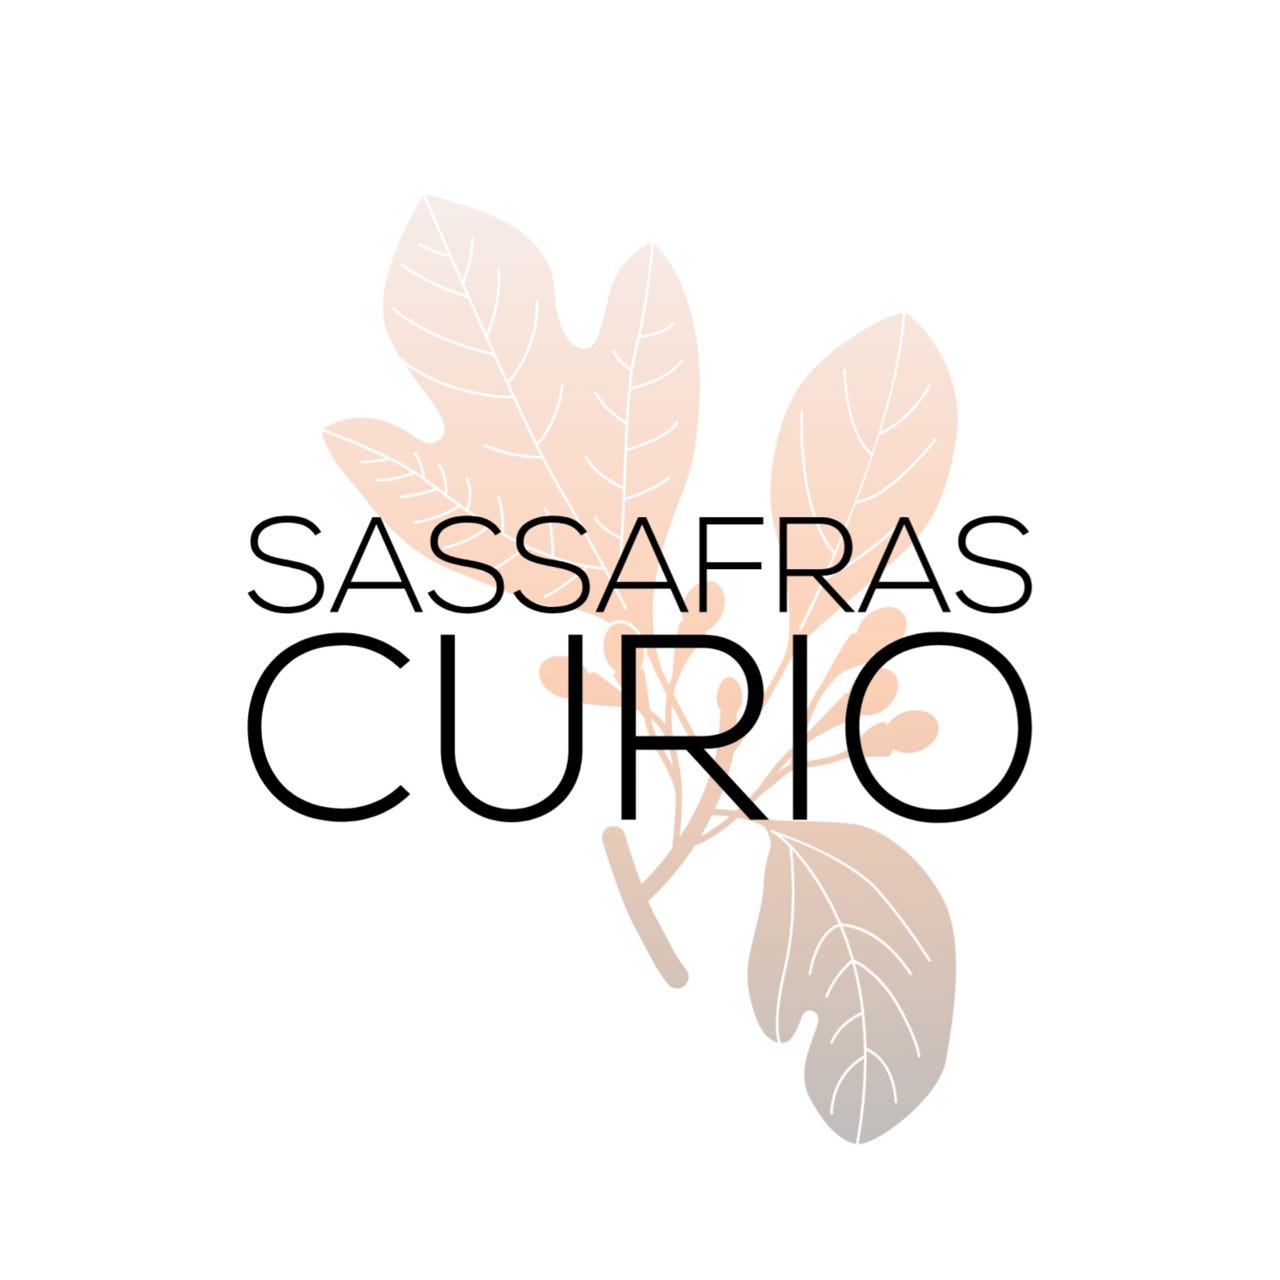 The Sassafras Curio